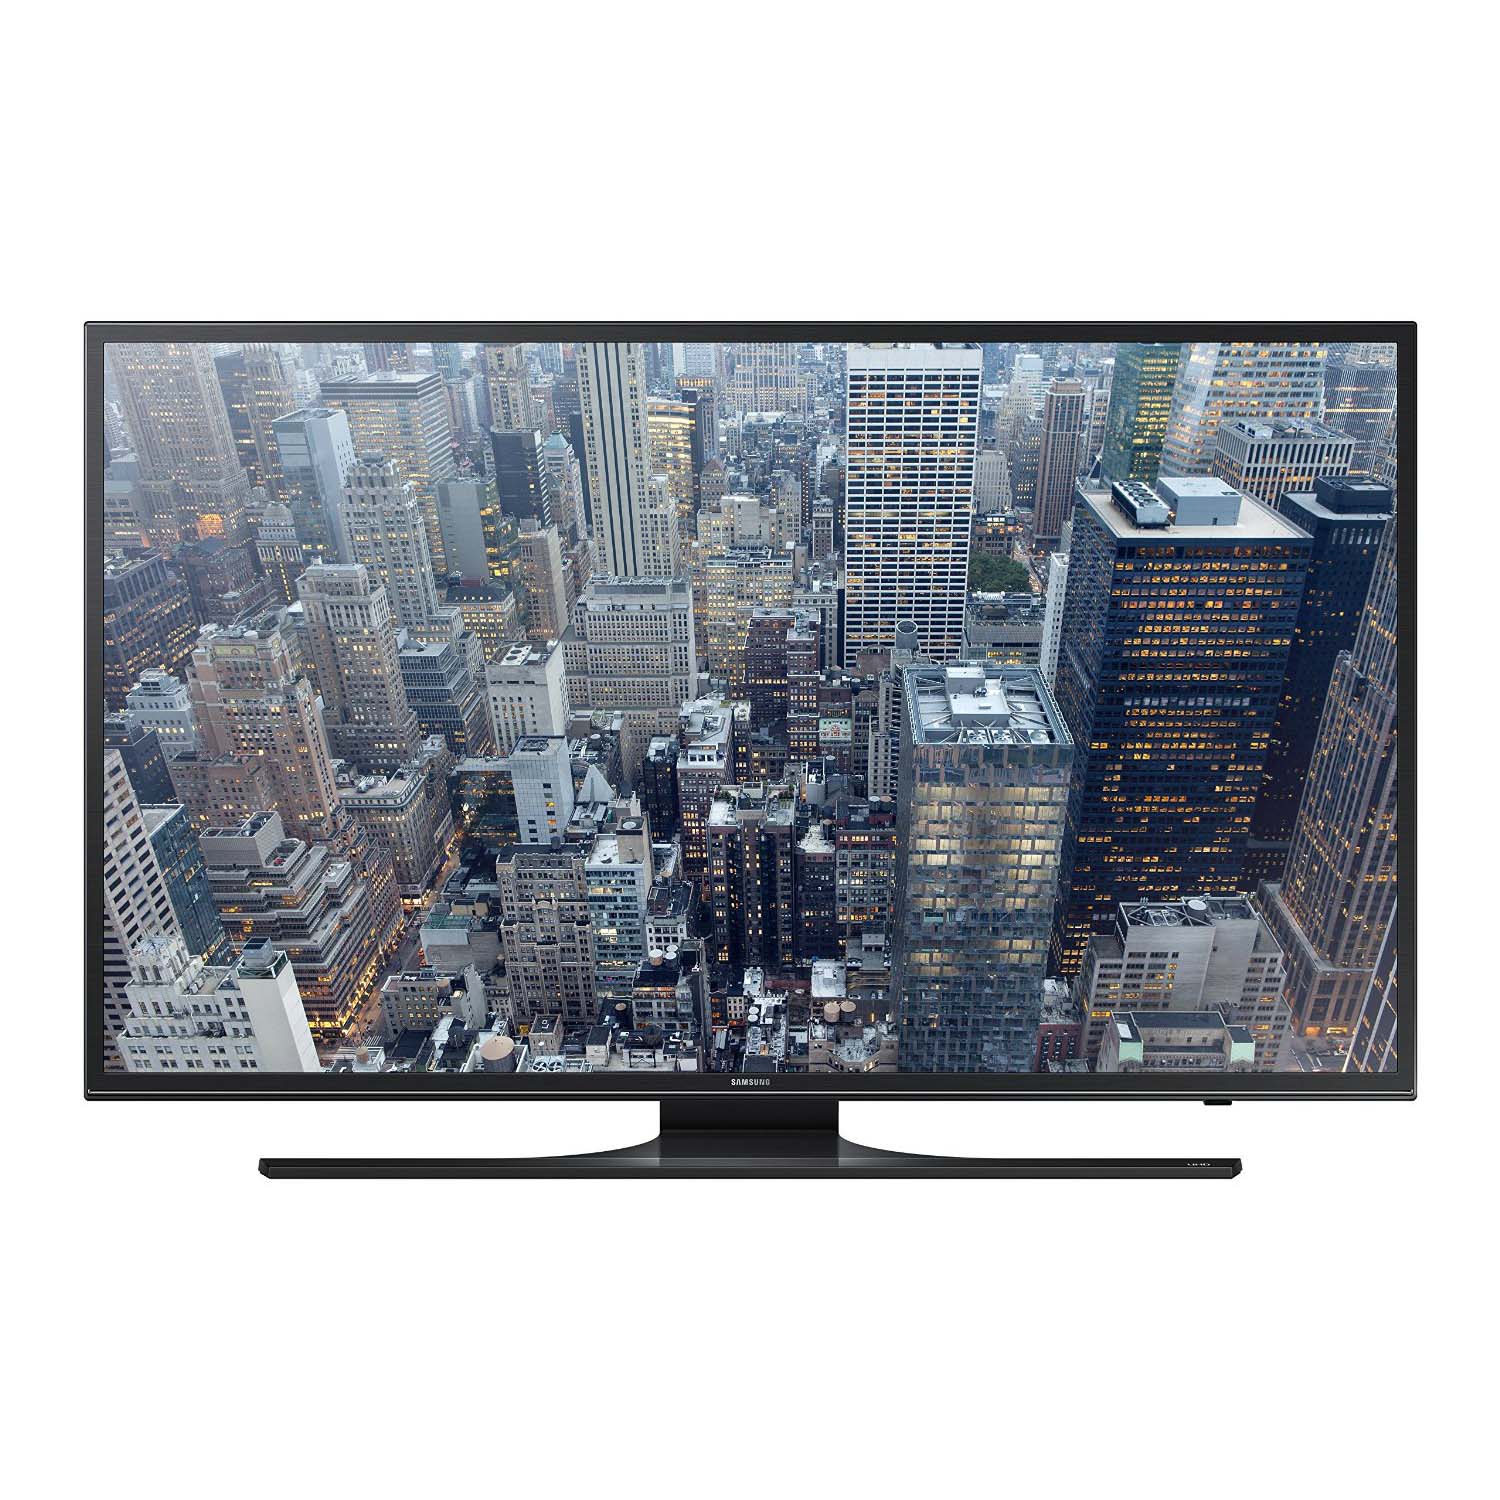 Samsung UN60JU6500 60-Inch 4K Ultra HD Smart LED TV (2015 Model) *관부가세 별도*